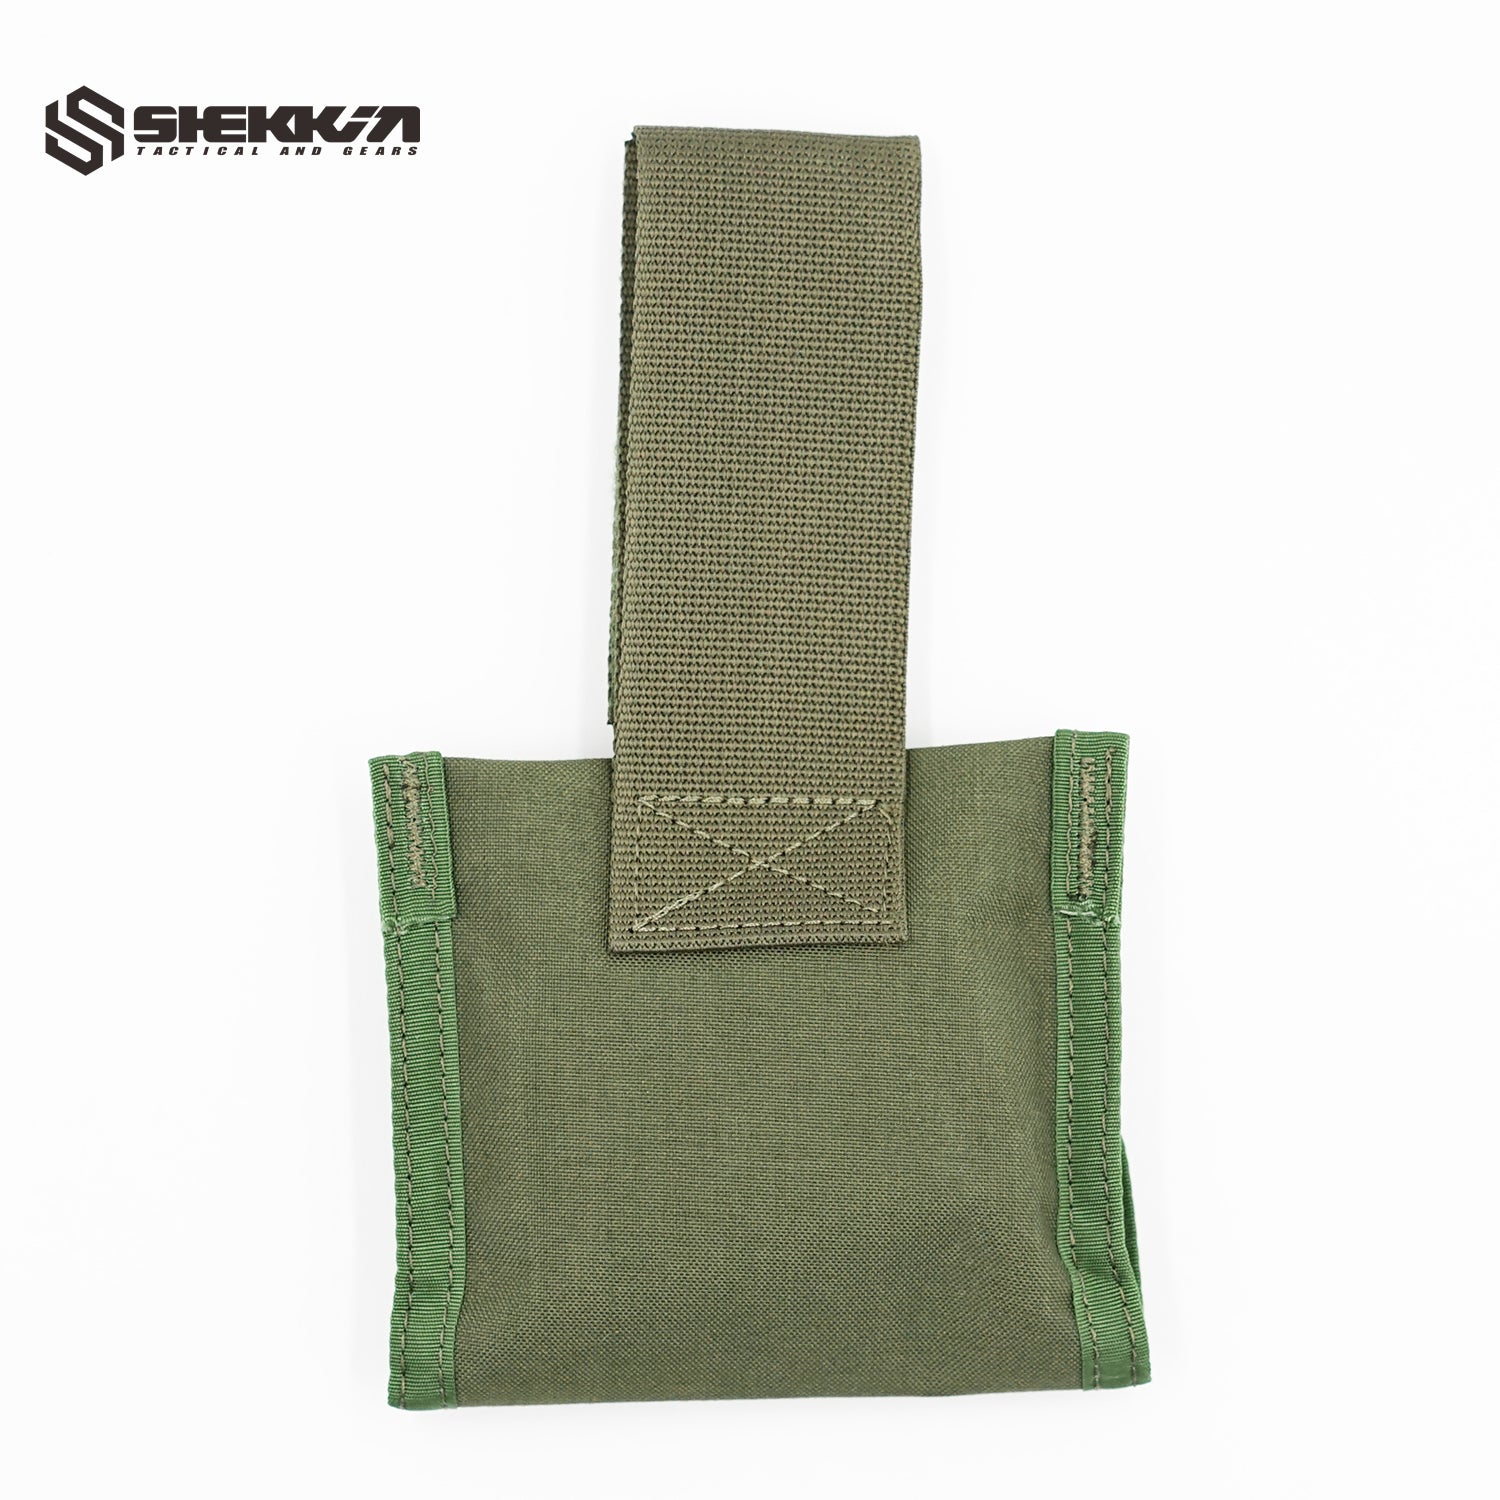 OD Green custom inverted frag pouch - Shekkin Gears